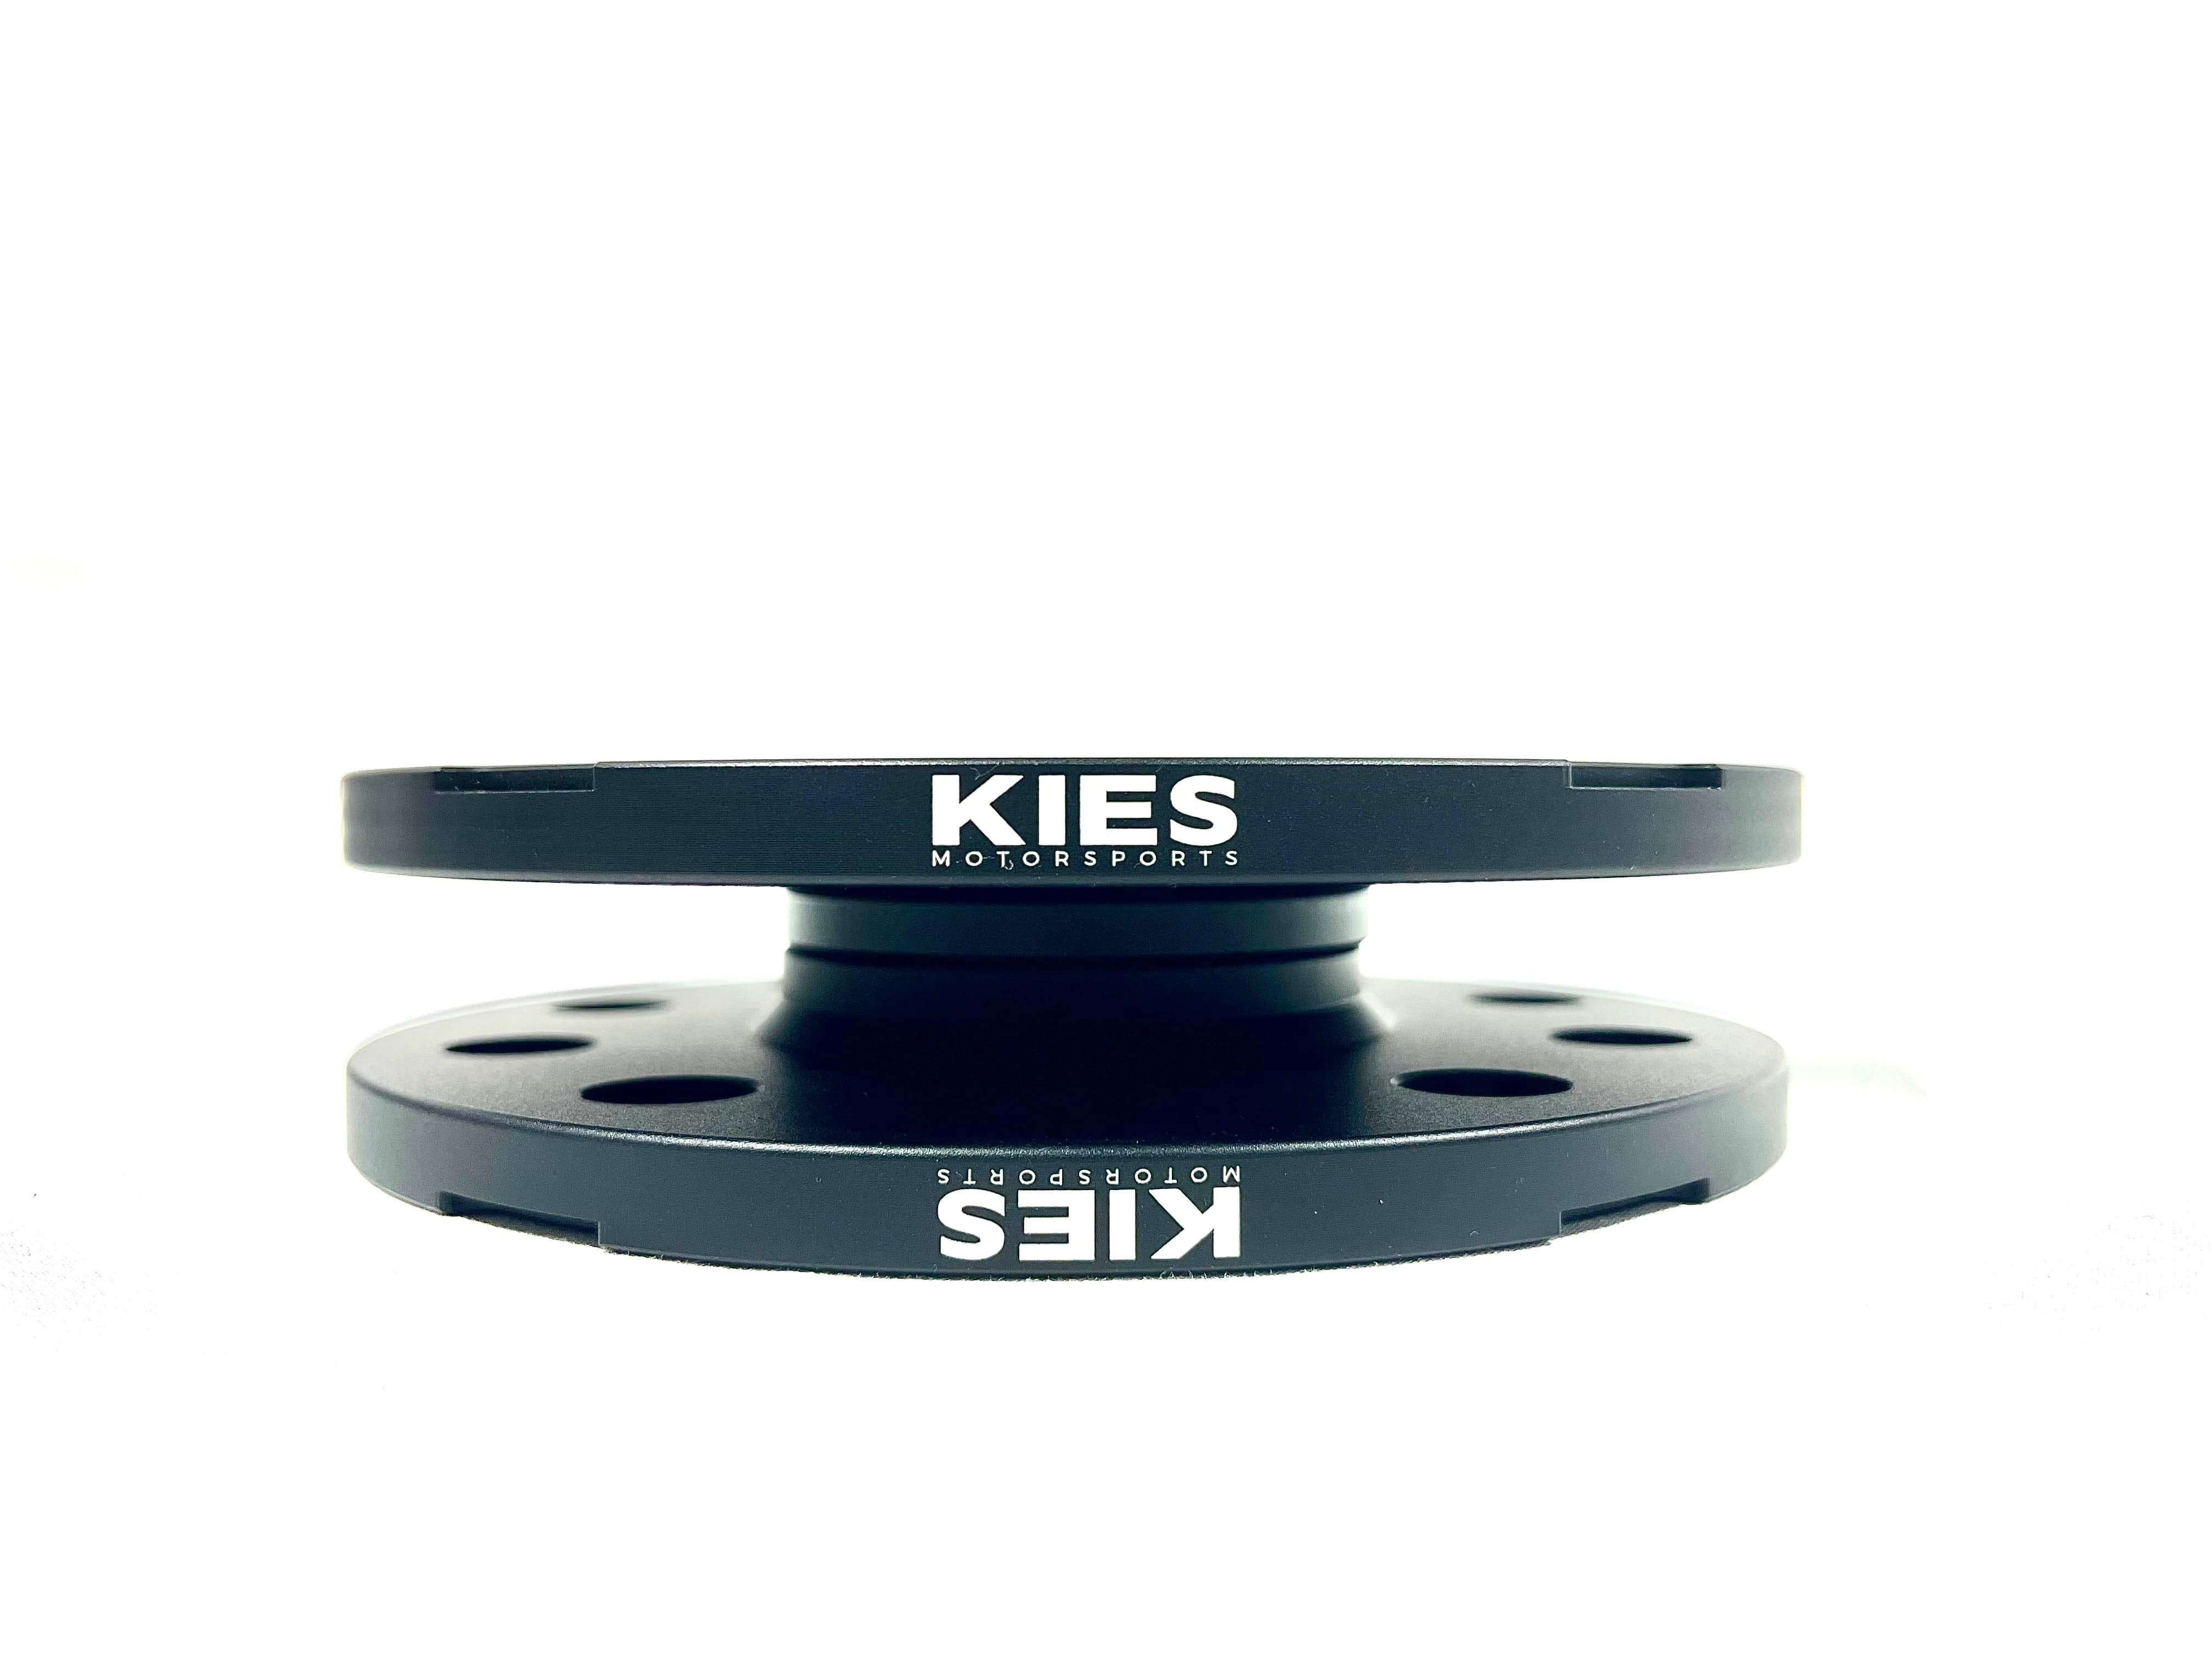 Kies-Motorsports Kies Motorsports Kies Motorsports Porsche Wheel Spacers 5 x 130 71.6mm Center Bore Black Finish (Set of 2)